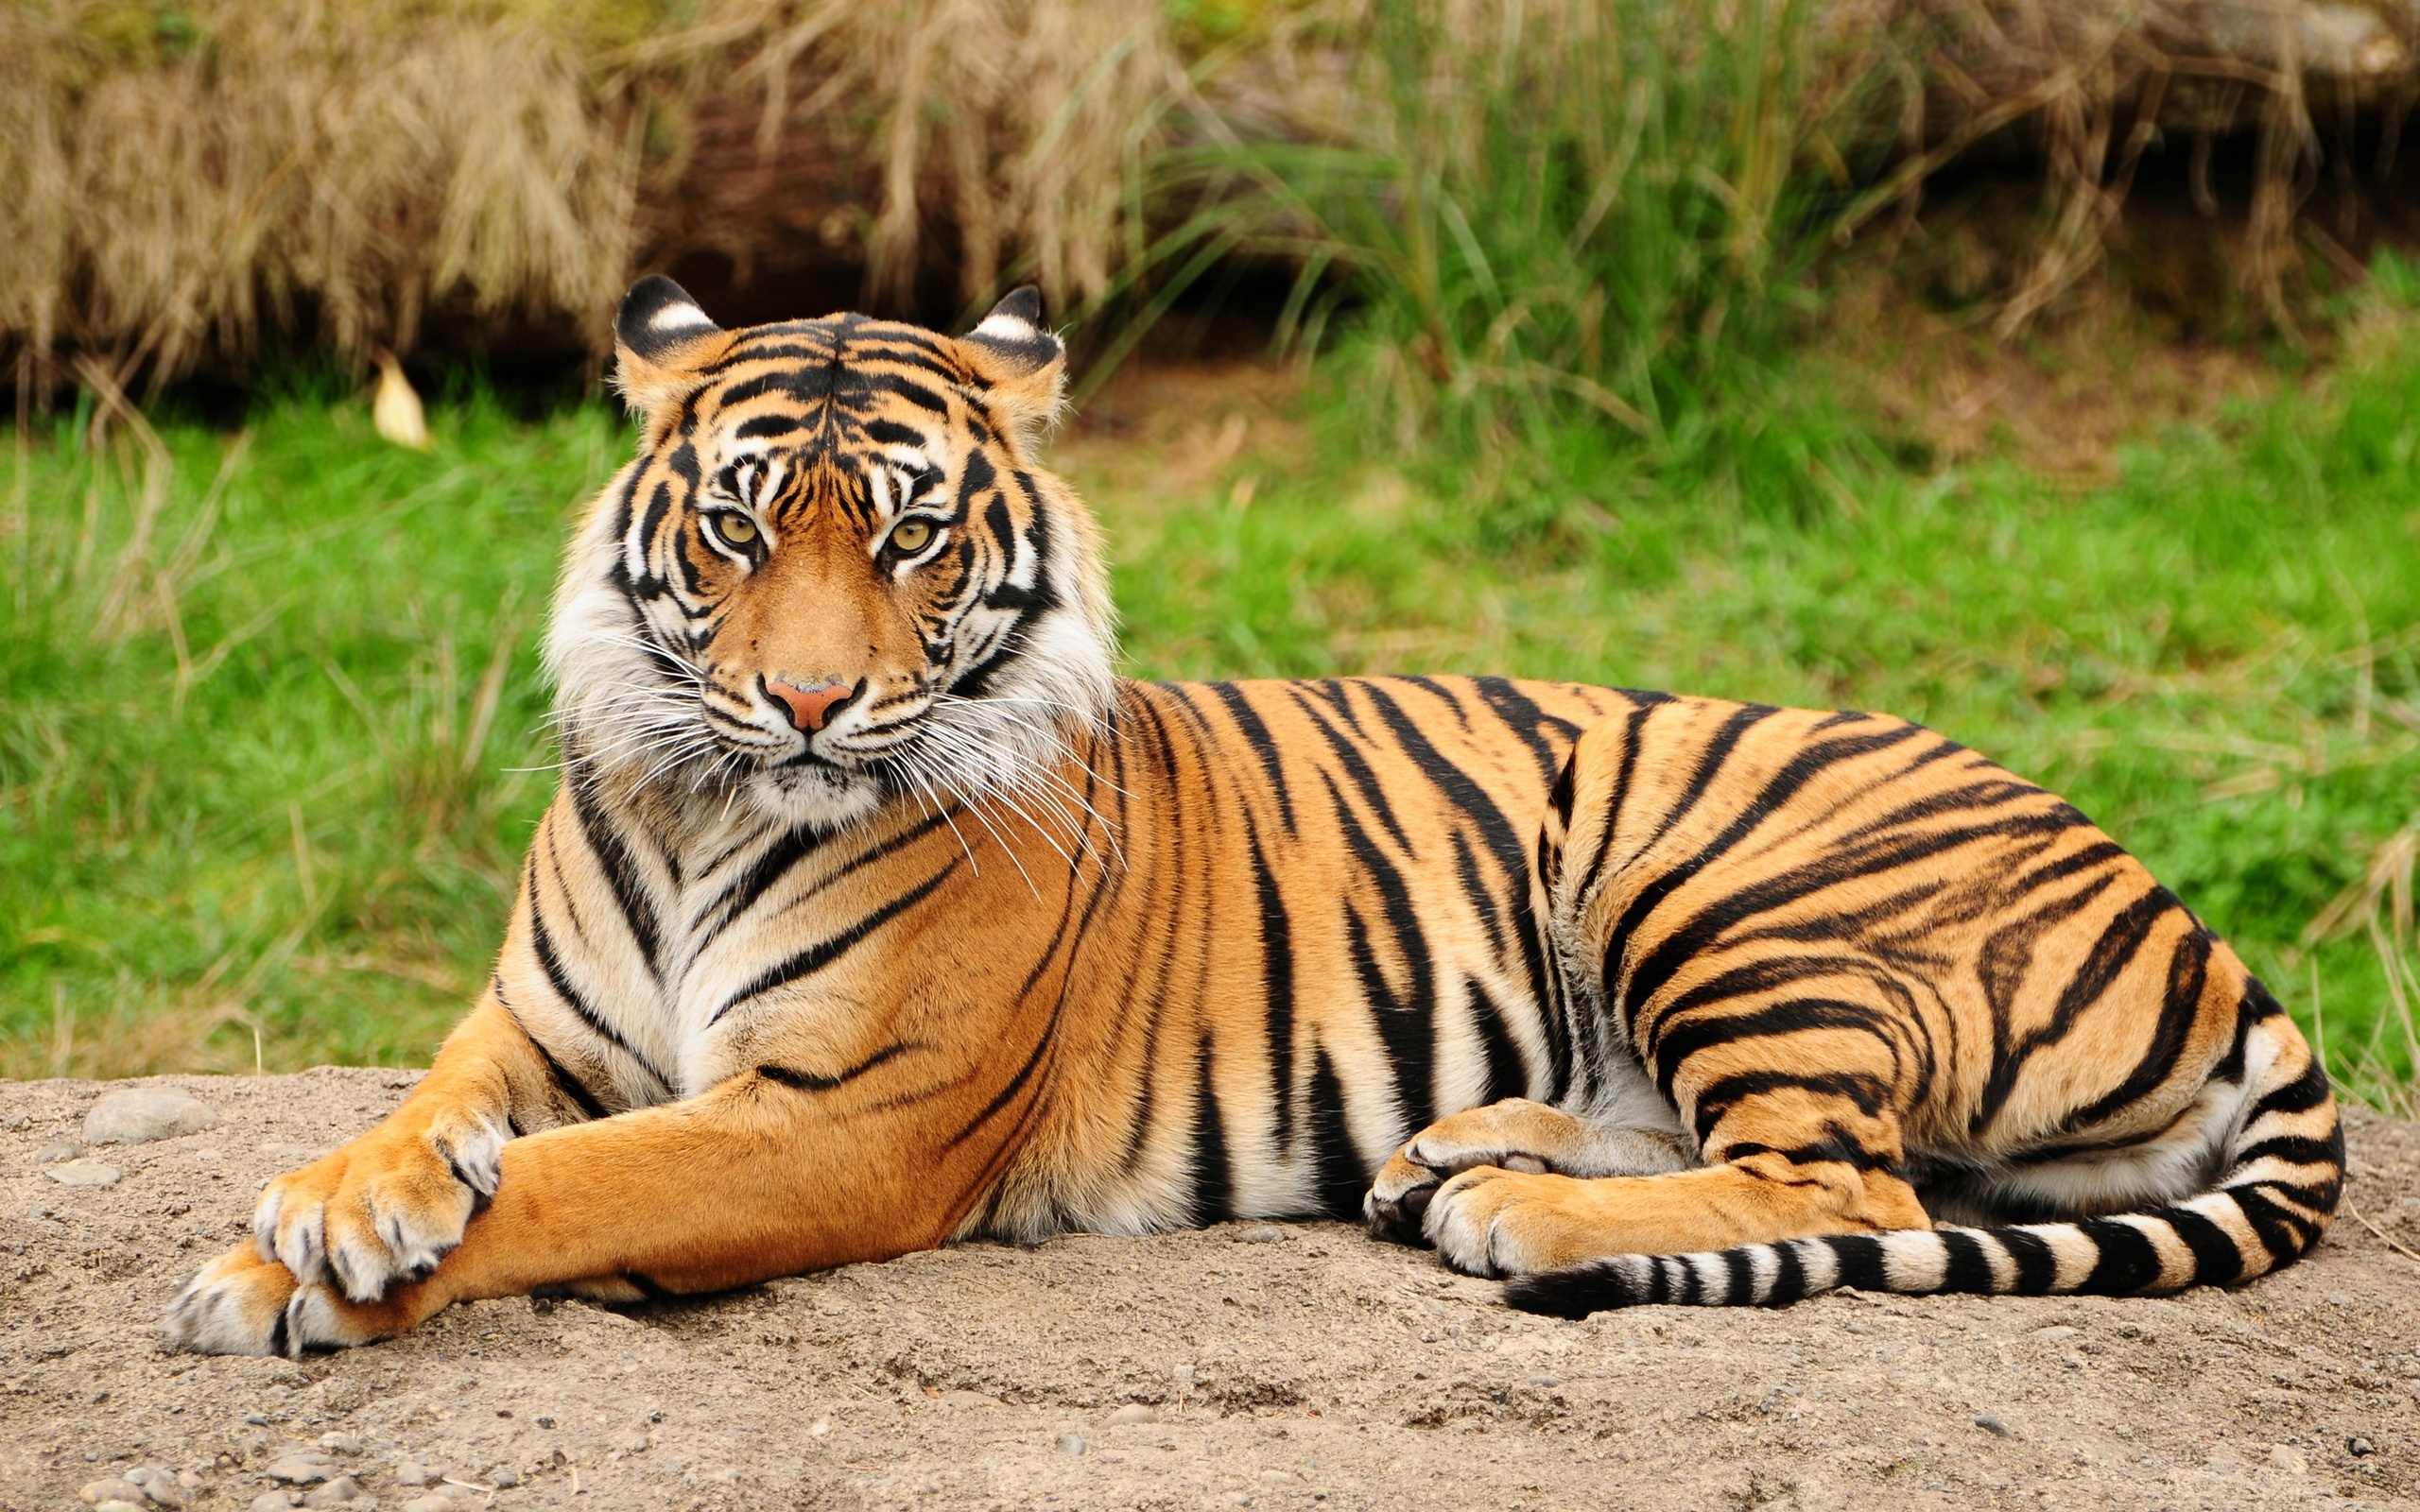 image de tigre